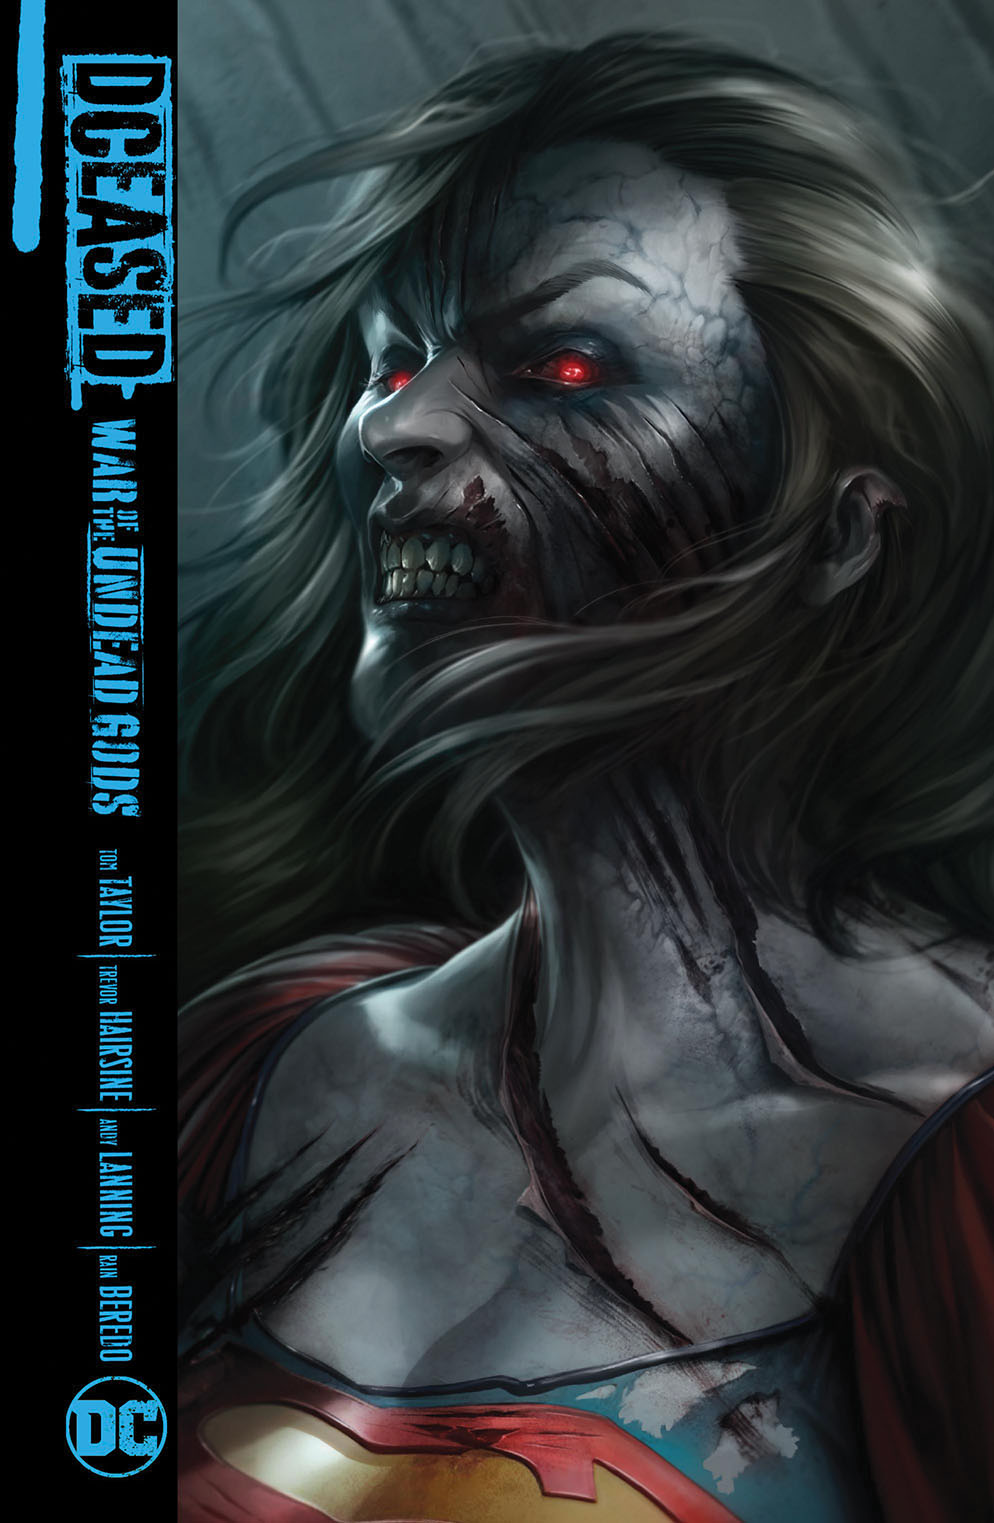 DCeased Graphic Novel Volume 5 War of the Undead Gods